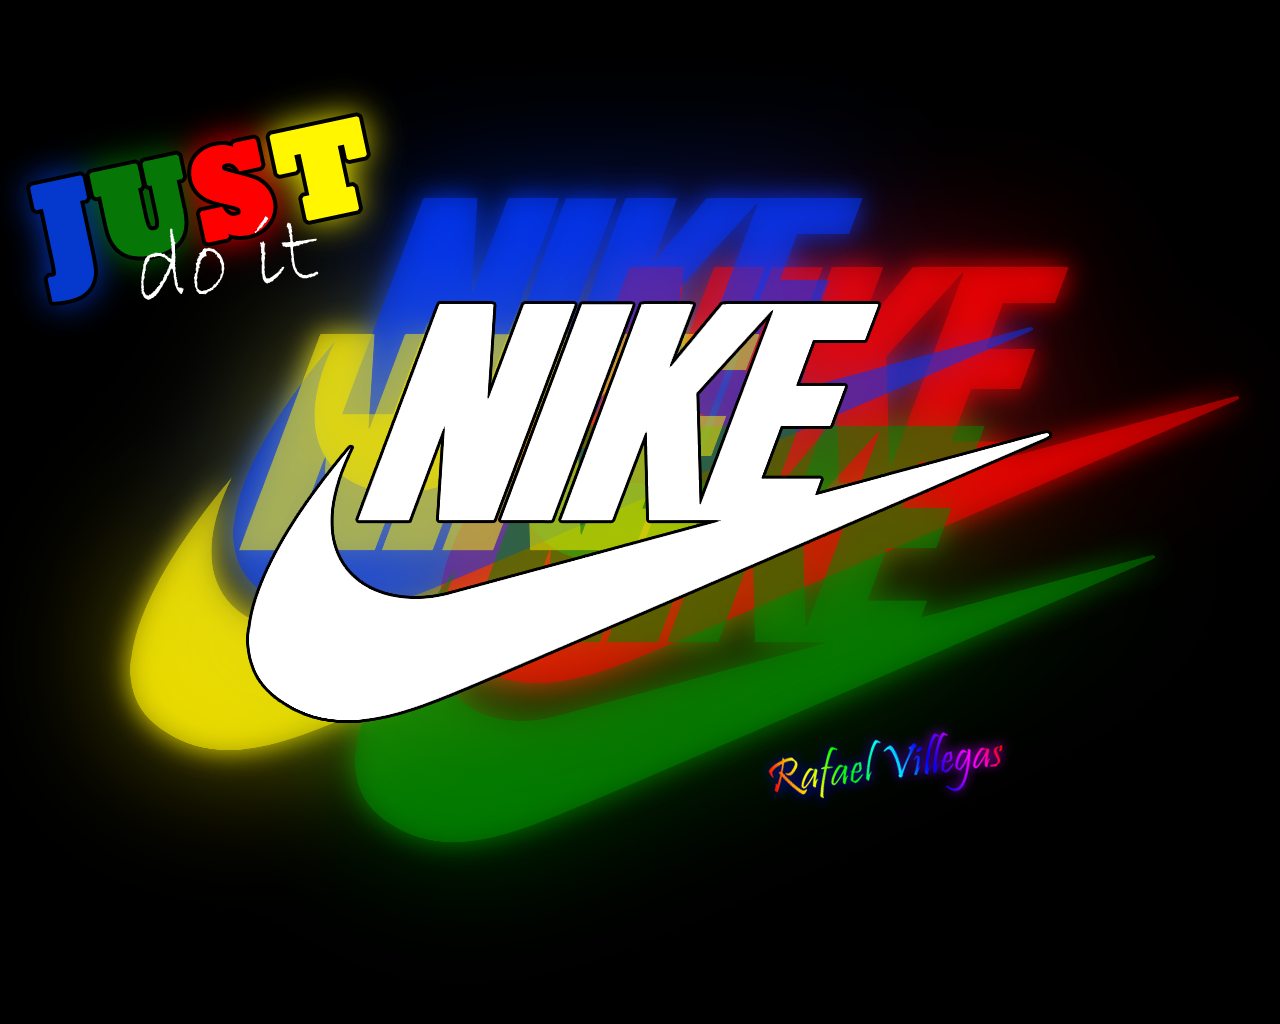 Rainbow Nike Logo Wallpaper